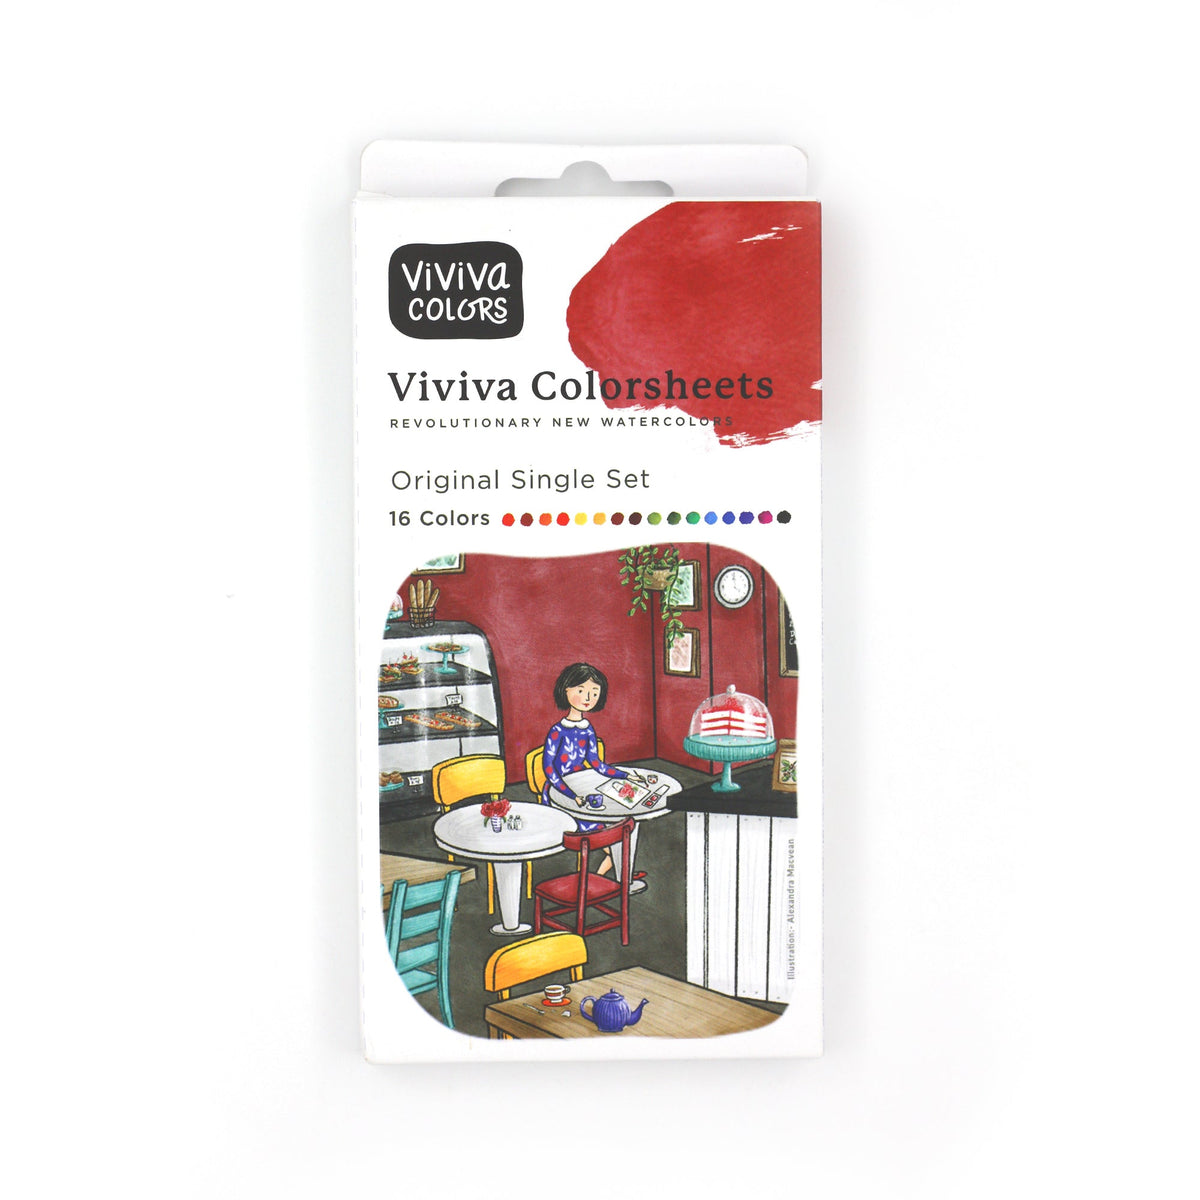 Viviva Colorsheet Watercolor Set, Original Single 16-Color Set - merriartist.com